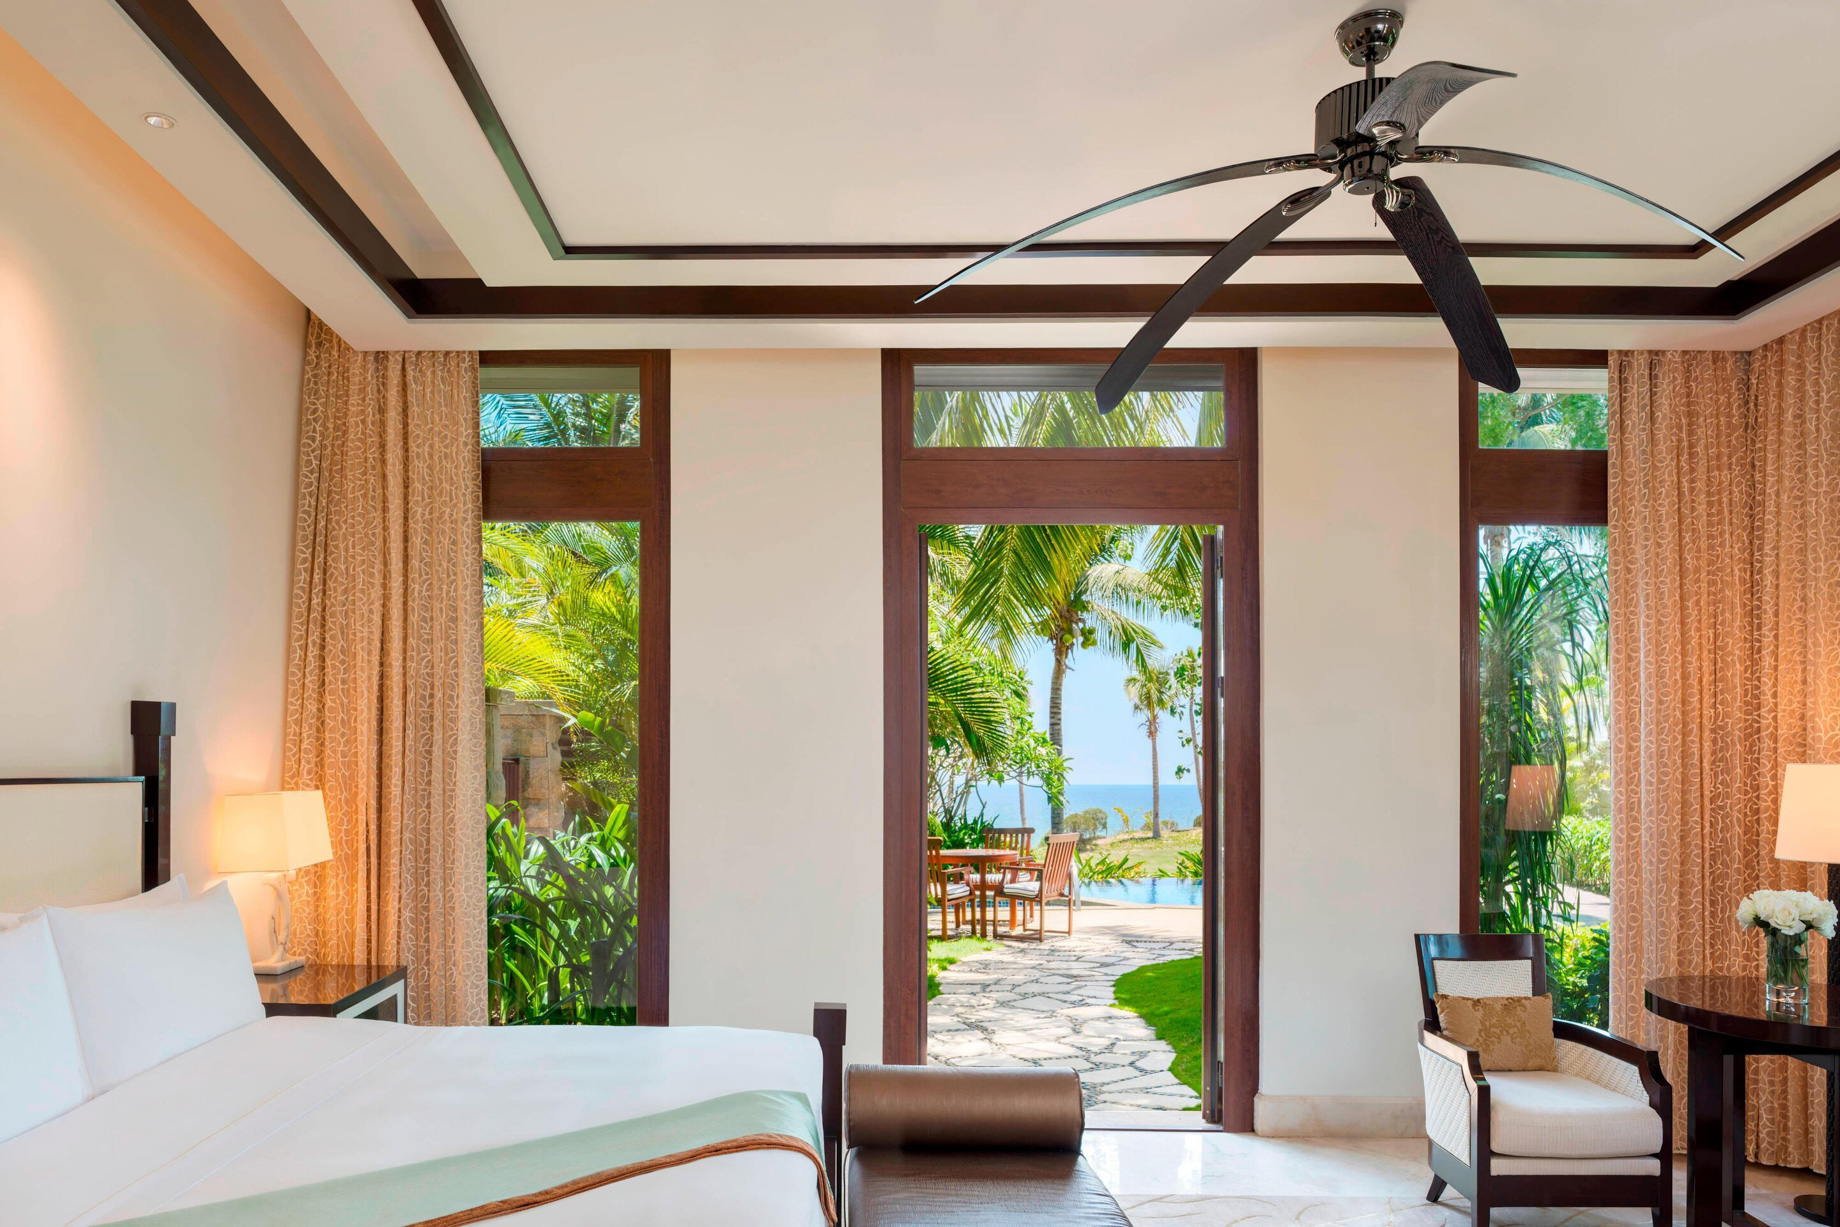 The St. Regis Sanya Yalong Bay Resort - Hainan, China - Seaside One Bedroom Villa King Bedroom View